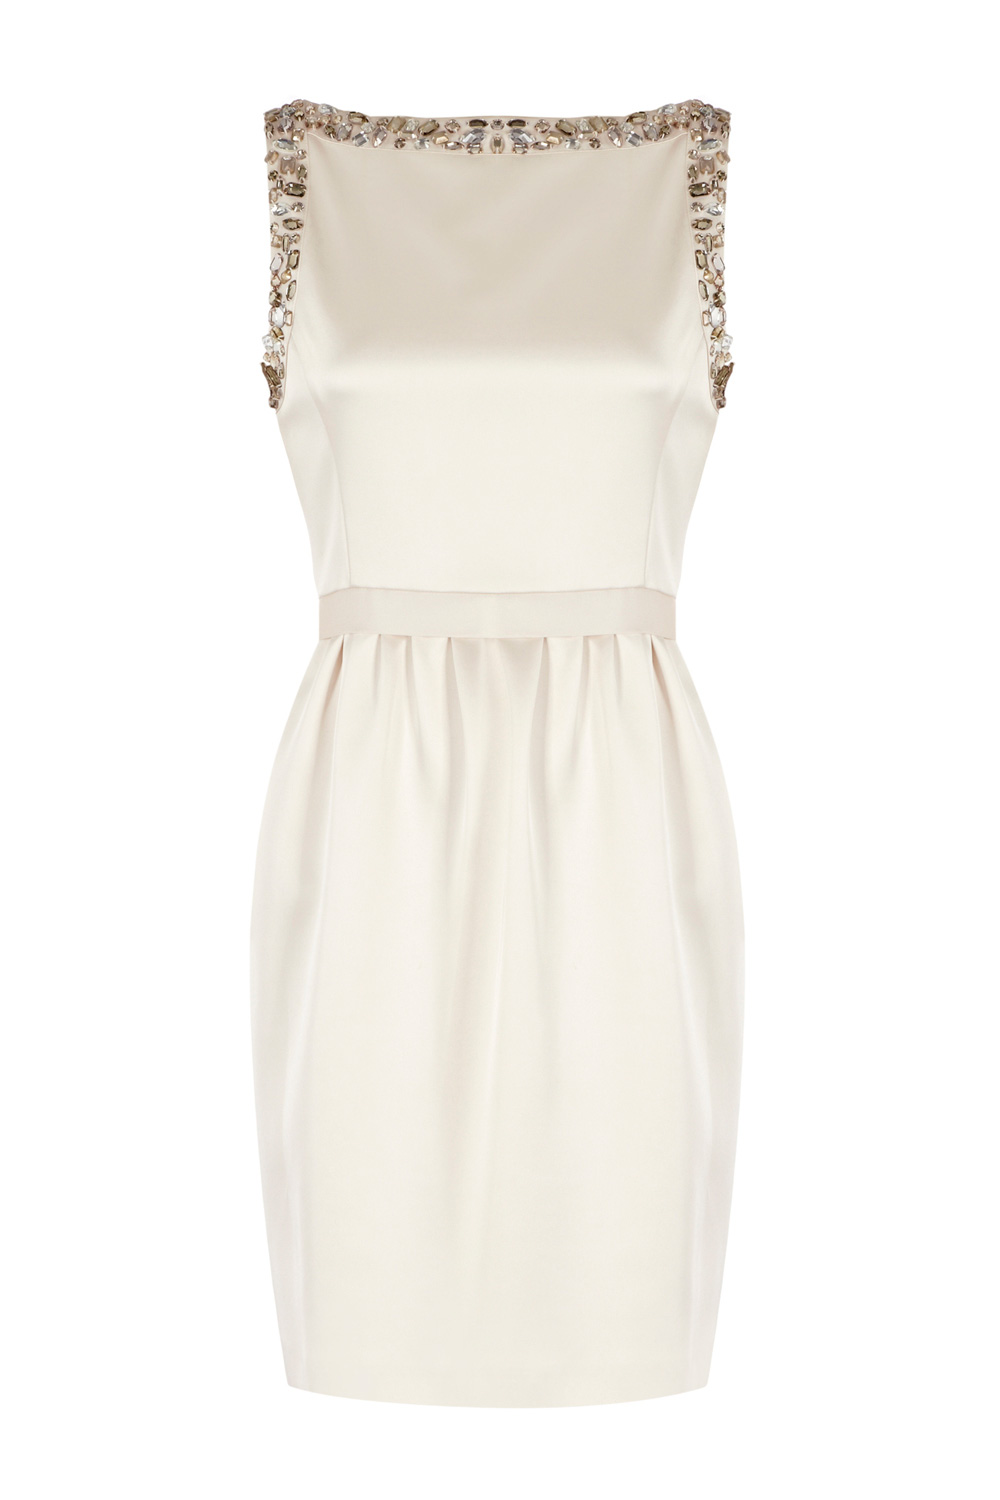 Lyst - Coast Edie Dress in White